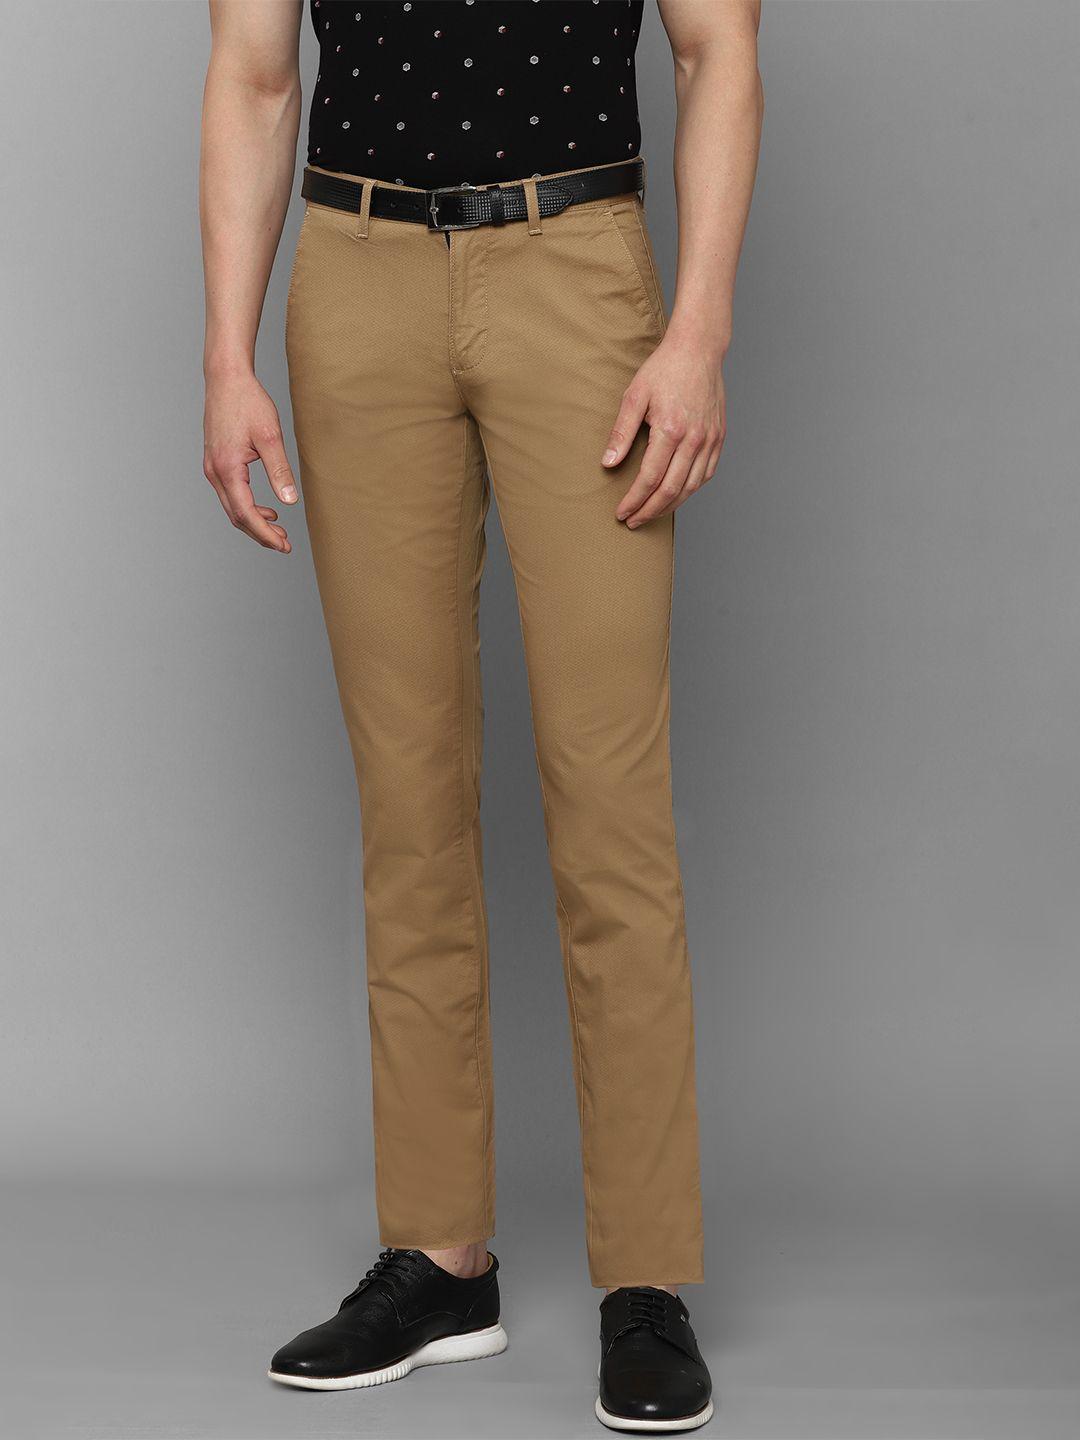 louis-philippe-sport-men-beige-&-blue-slim-fit-low-rise-regular-trousers